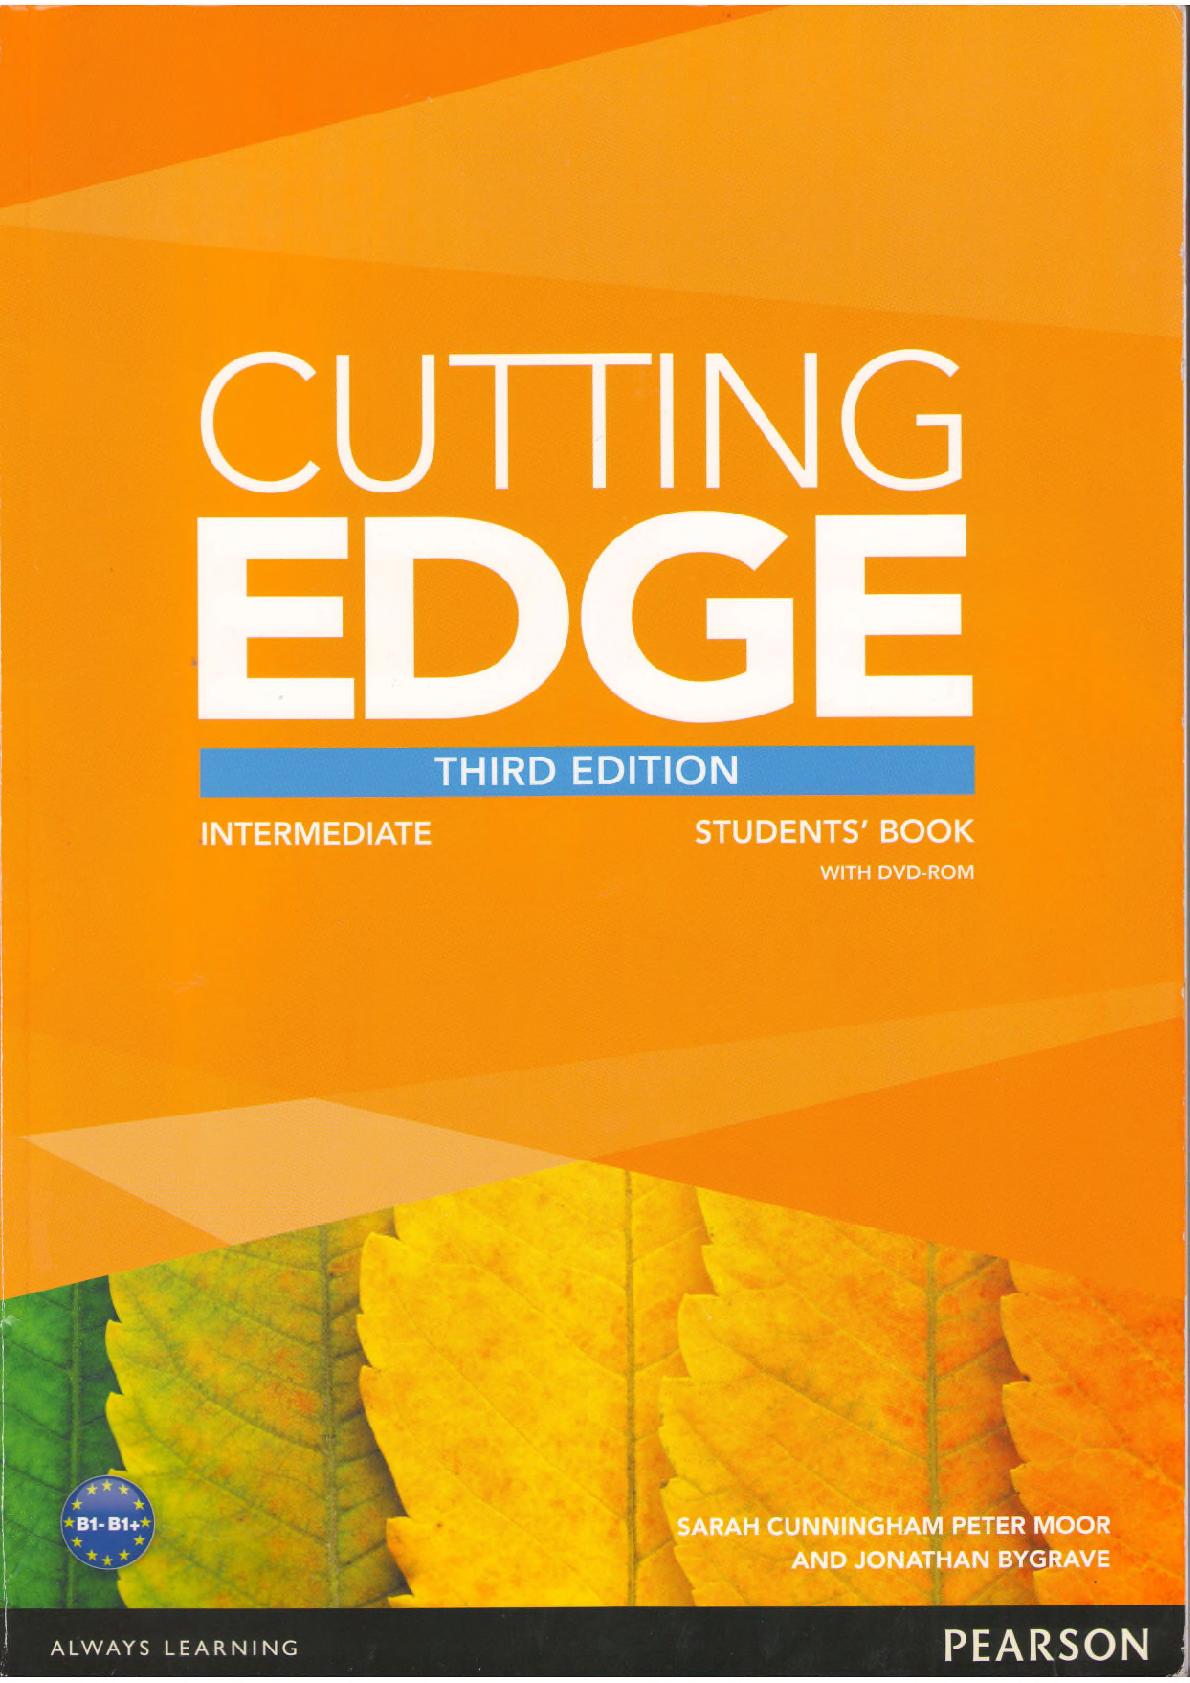 CUTTING EDGE 3rd Edition INTERMEDIATE Student's Book.pdf PDF Host